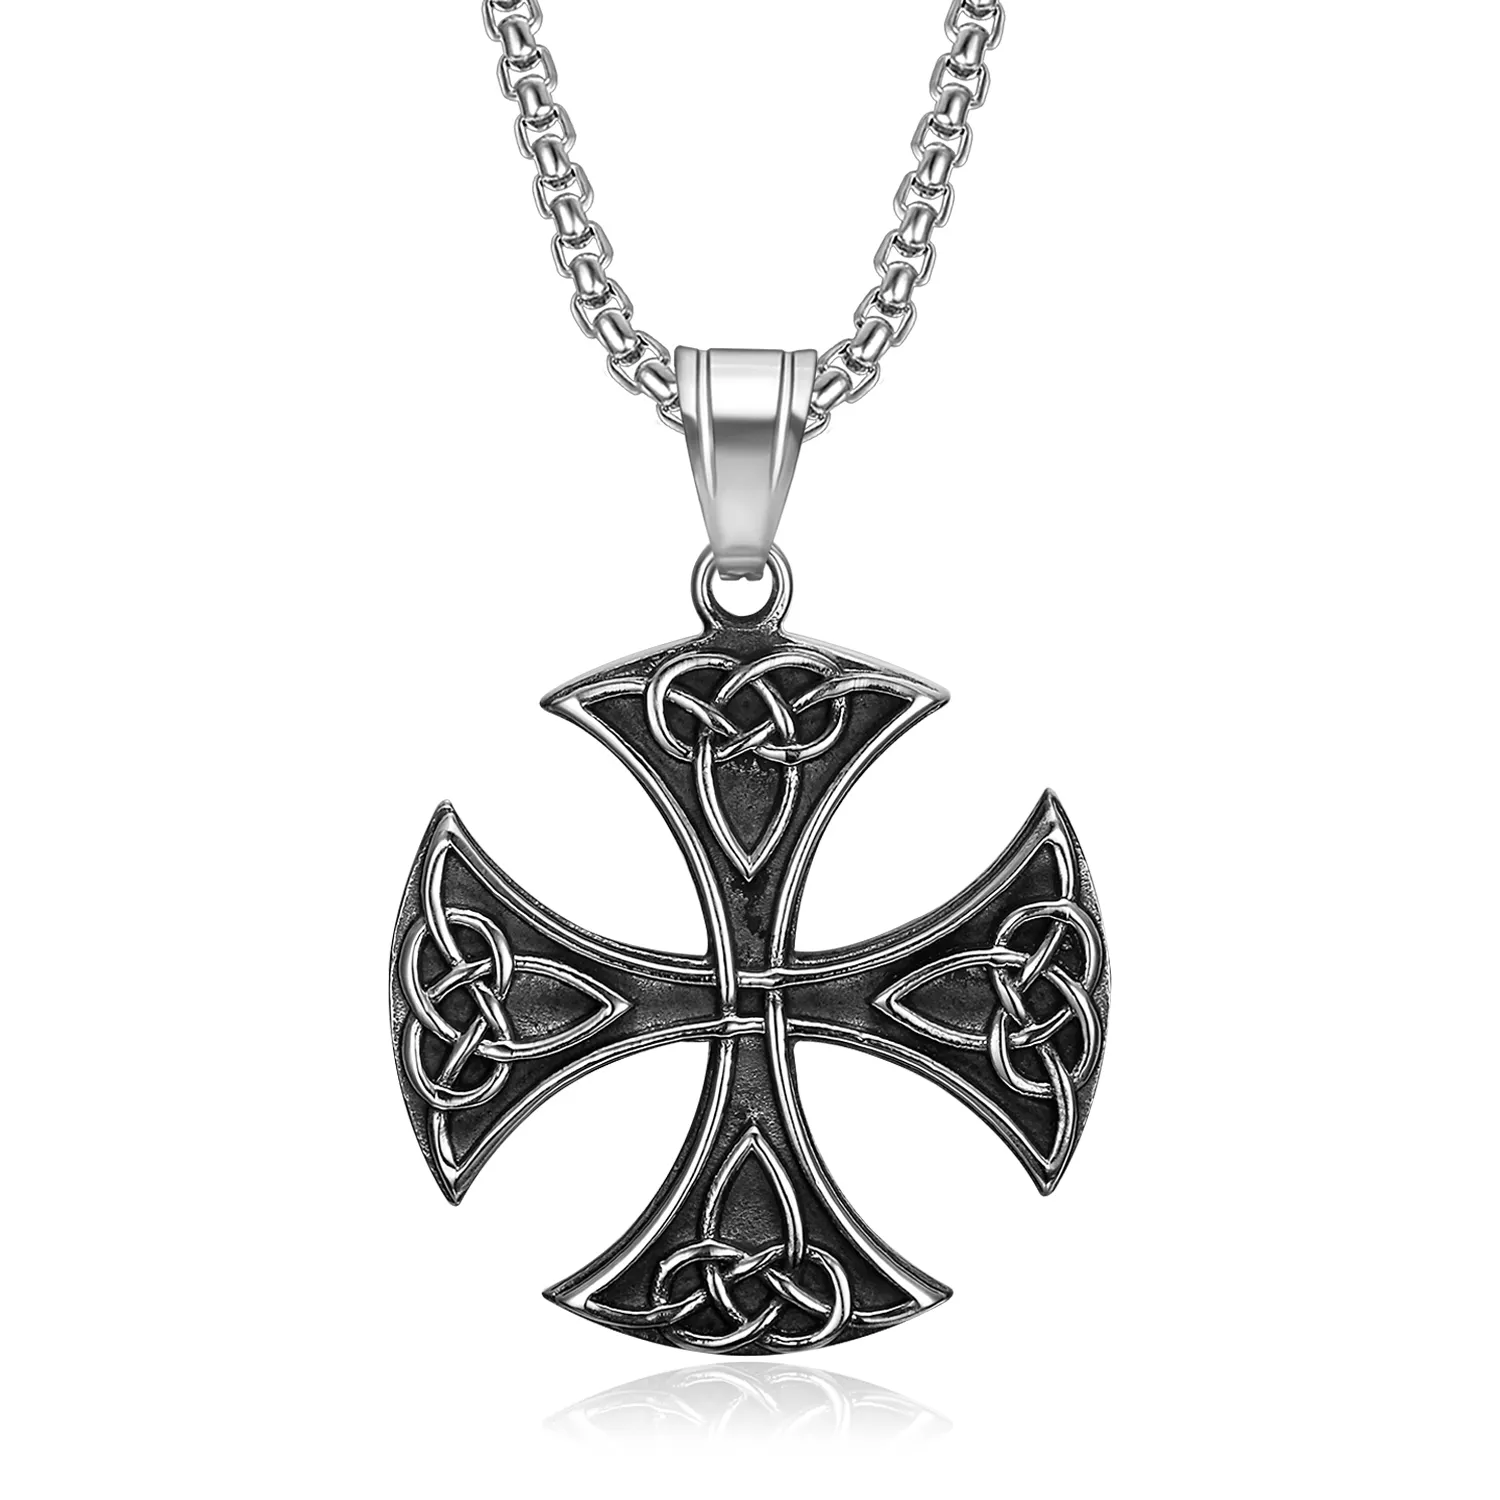 Handmade Stainless Steel Eternal Spiritual Symbol Triquetra Celtics Knot Pendant Norse Viking Cross Necklace for Men Women